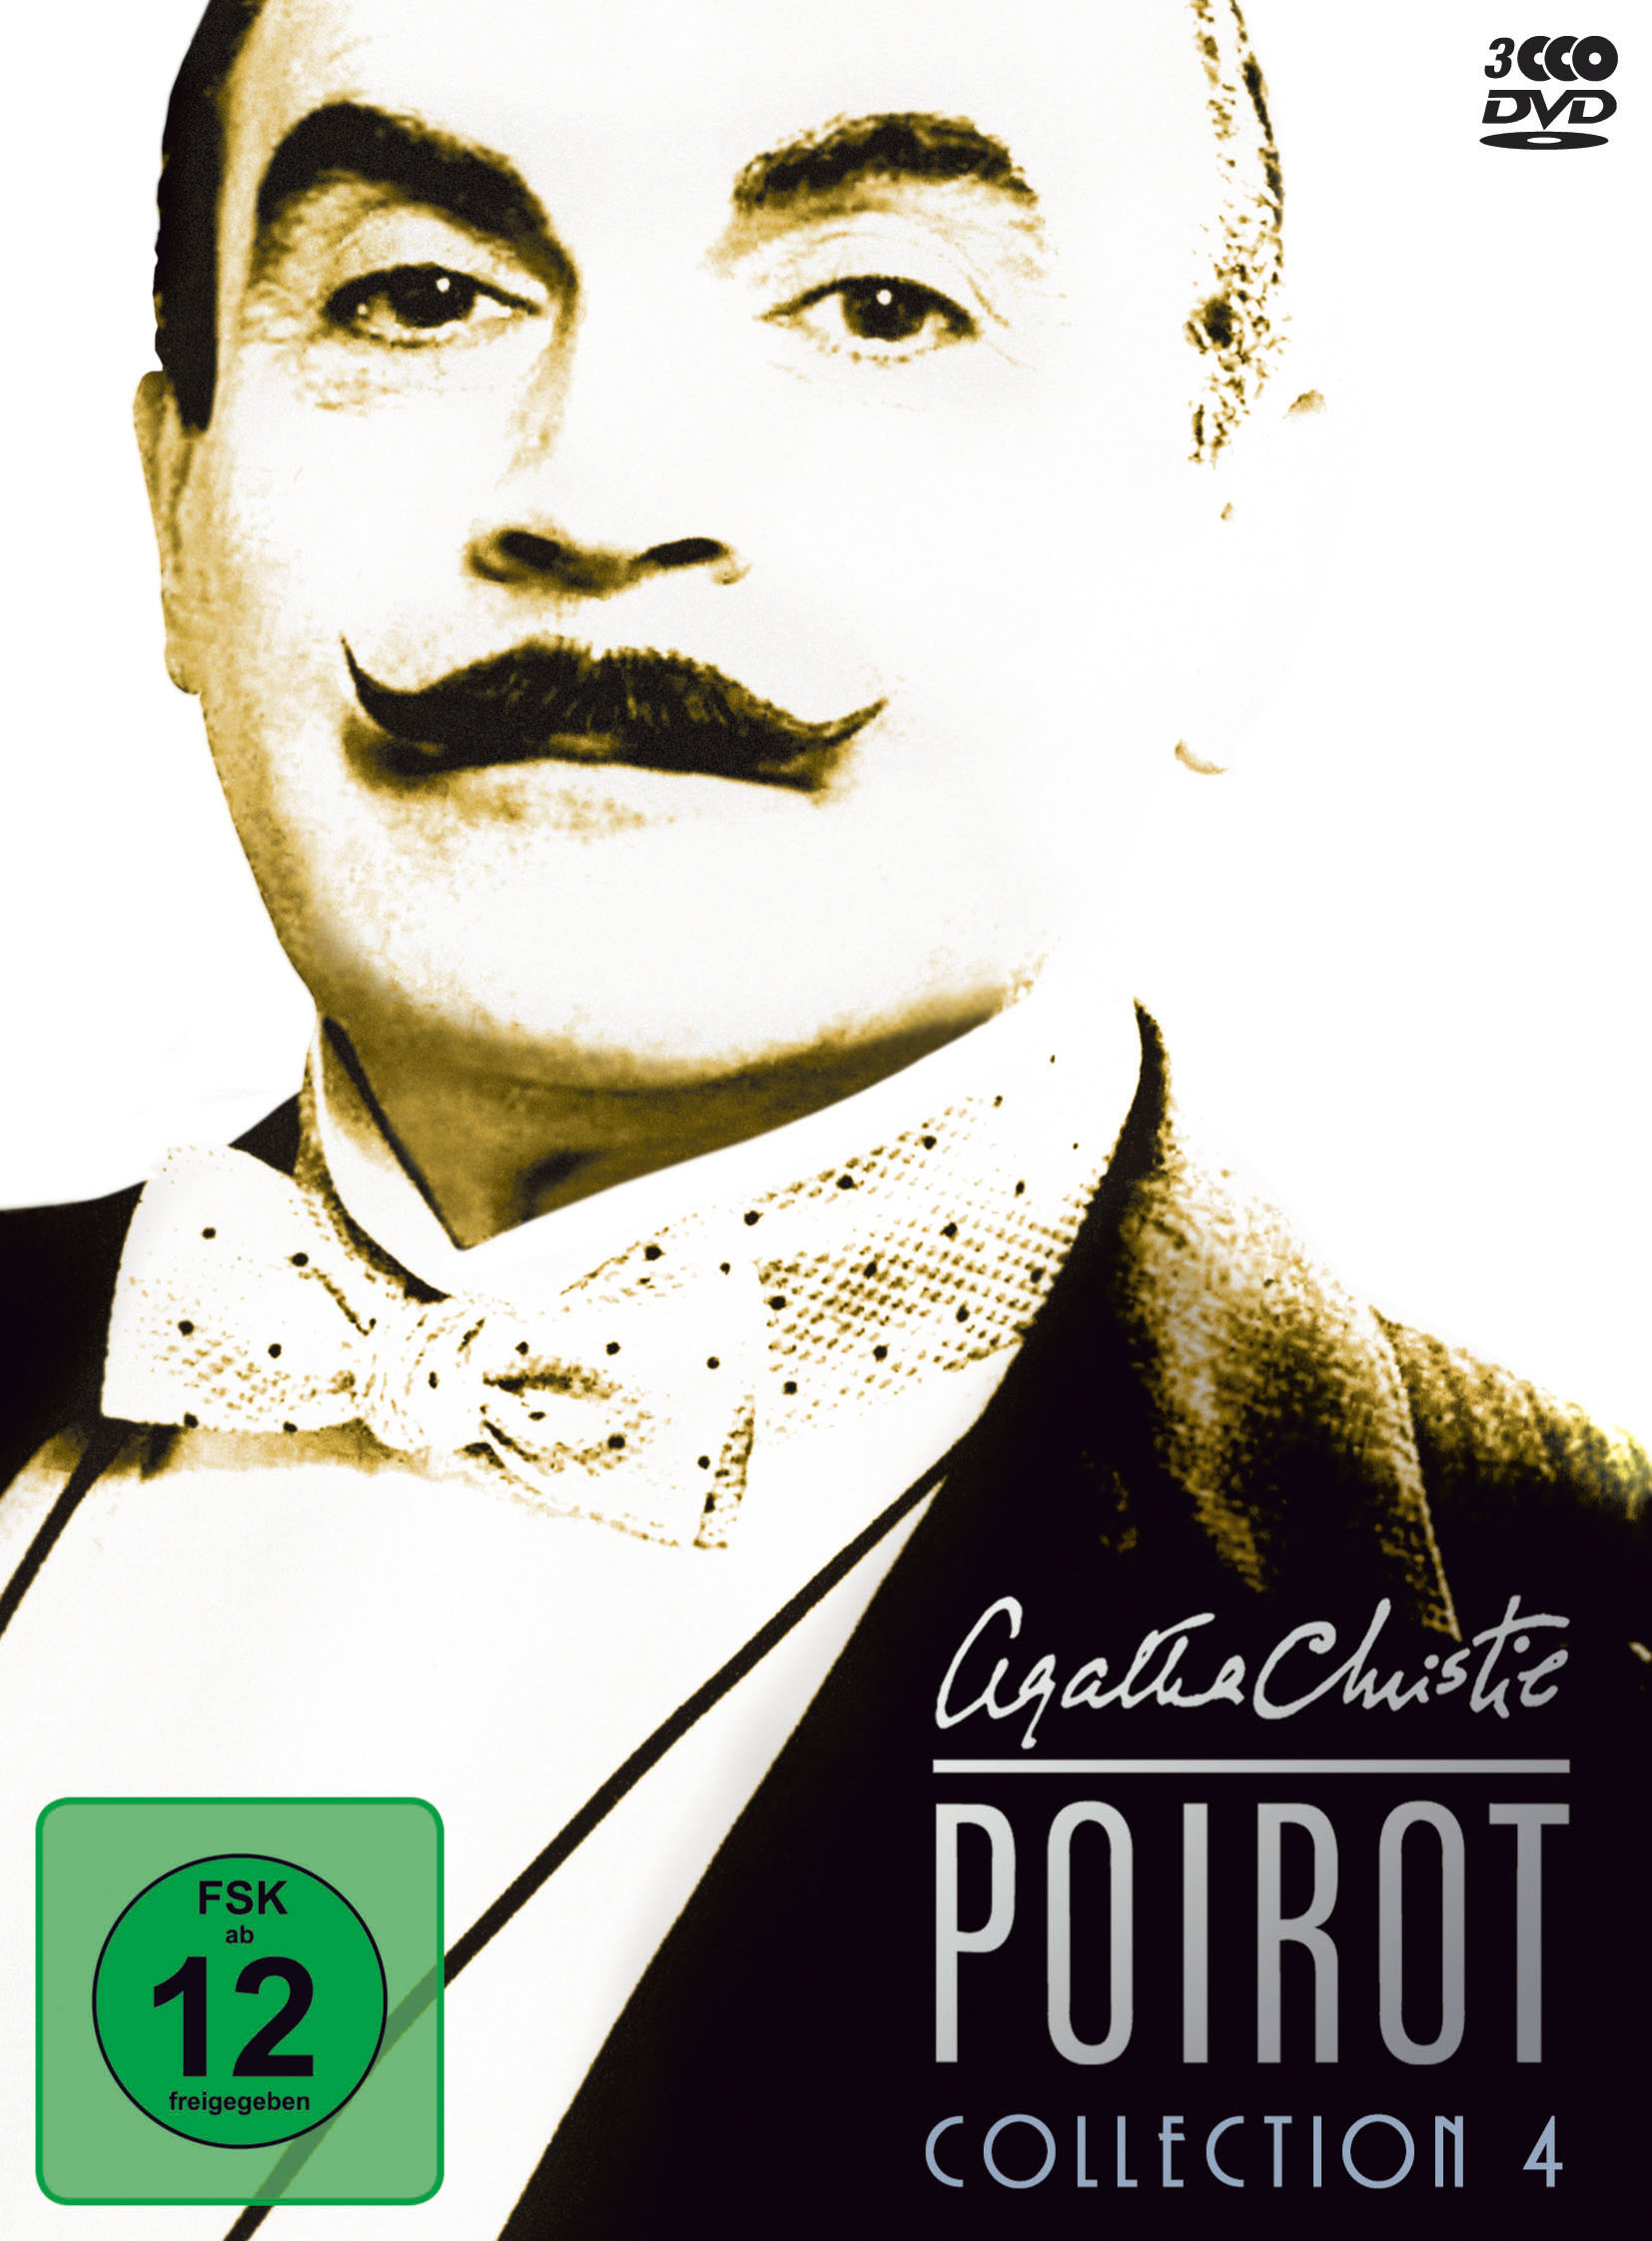 Agatha Christie: DVD Collection 5 Poirot 